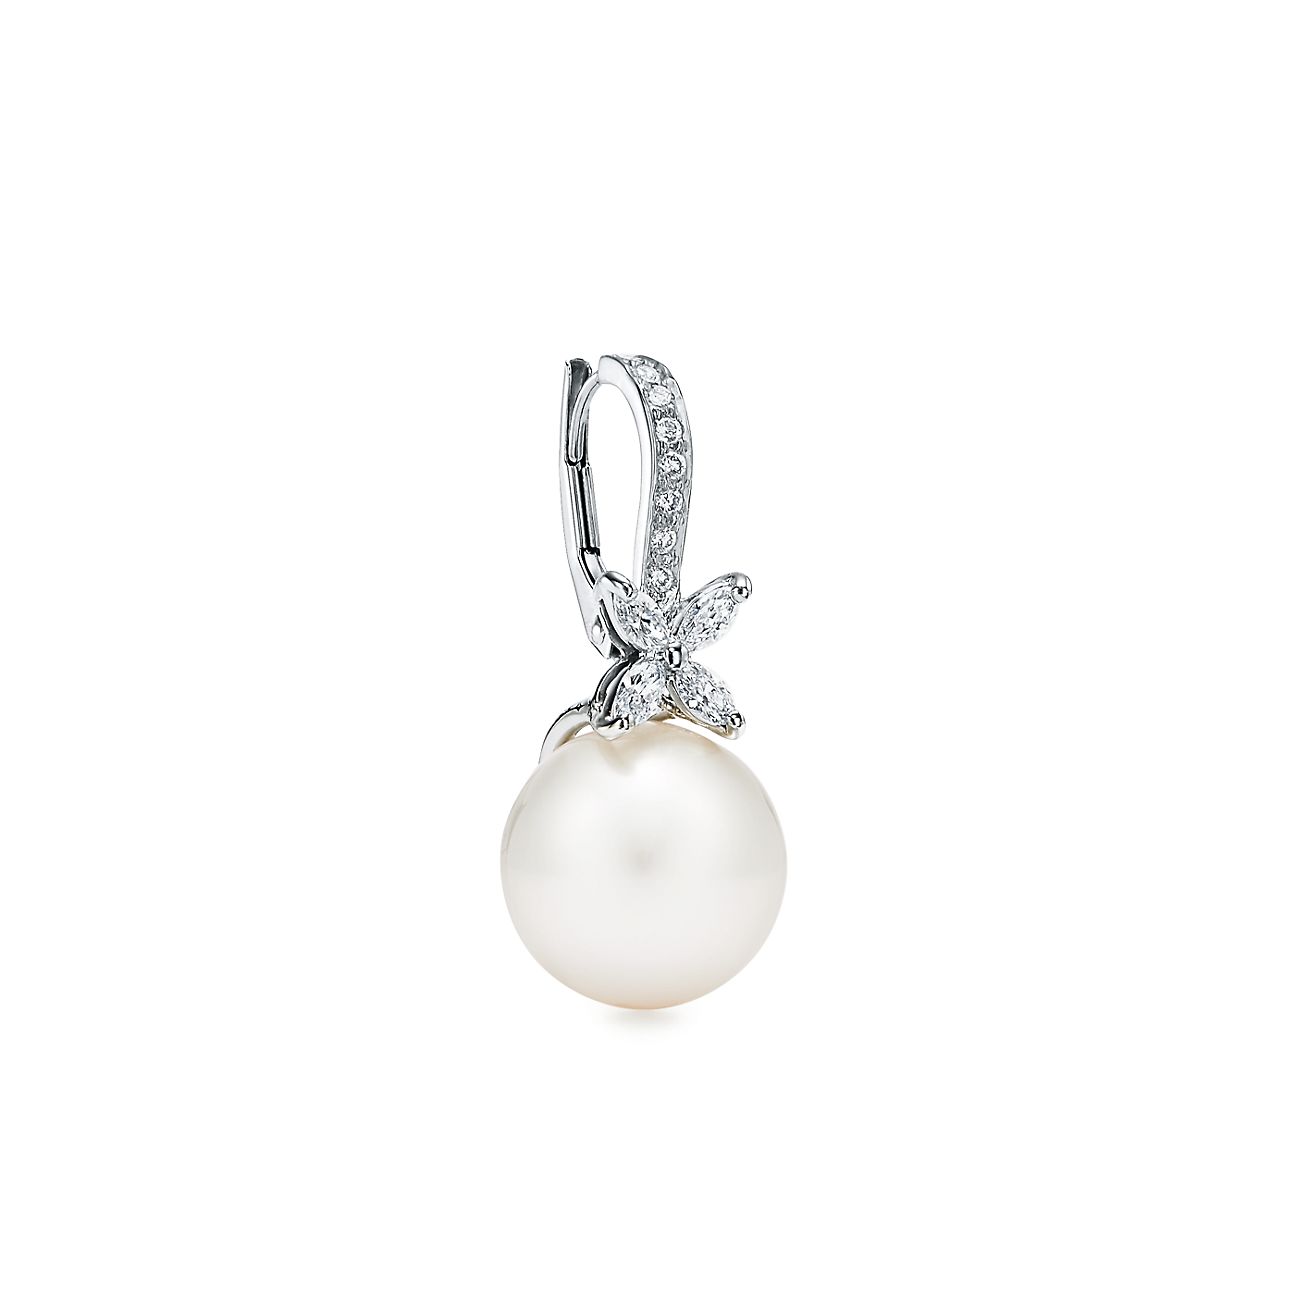 tiffany pearl and diamond earrings